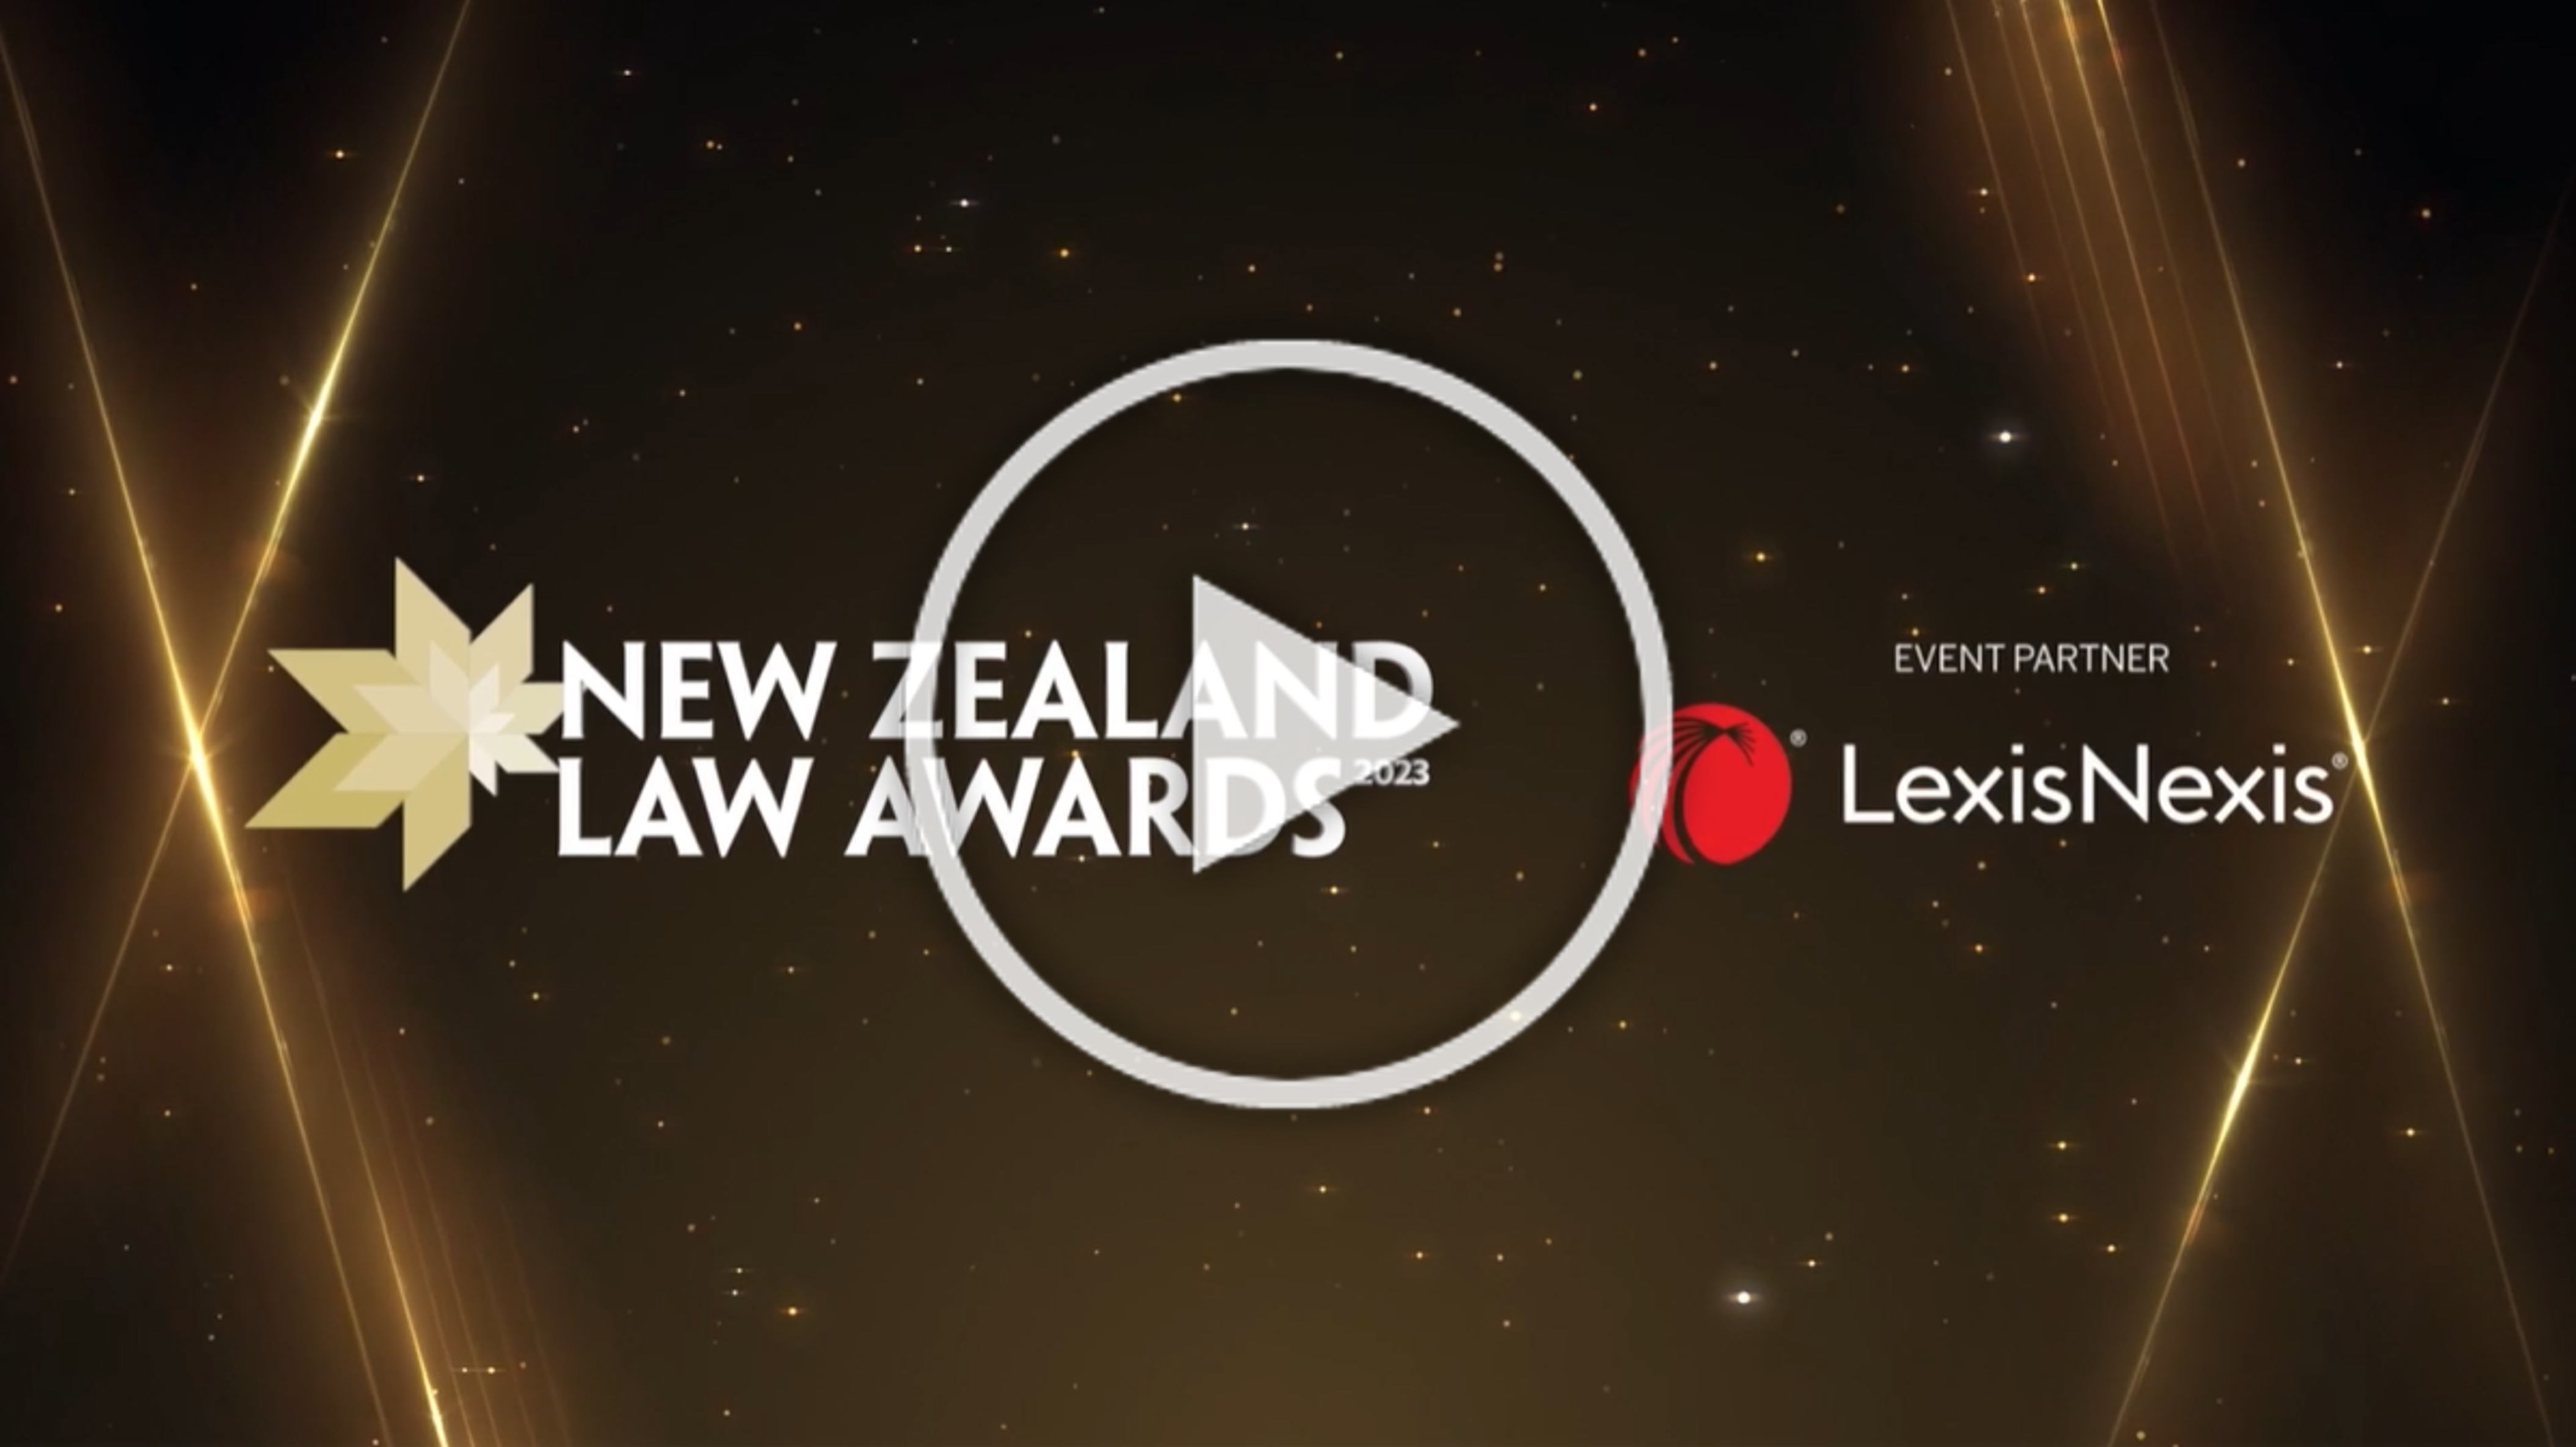 New Zealand Law Awards 2023: Highlights